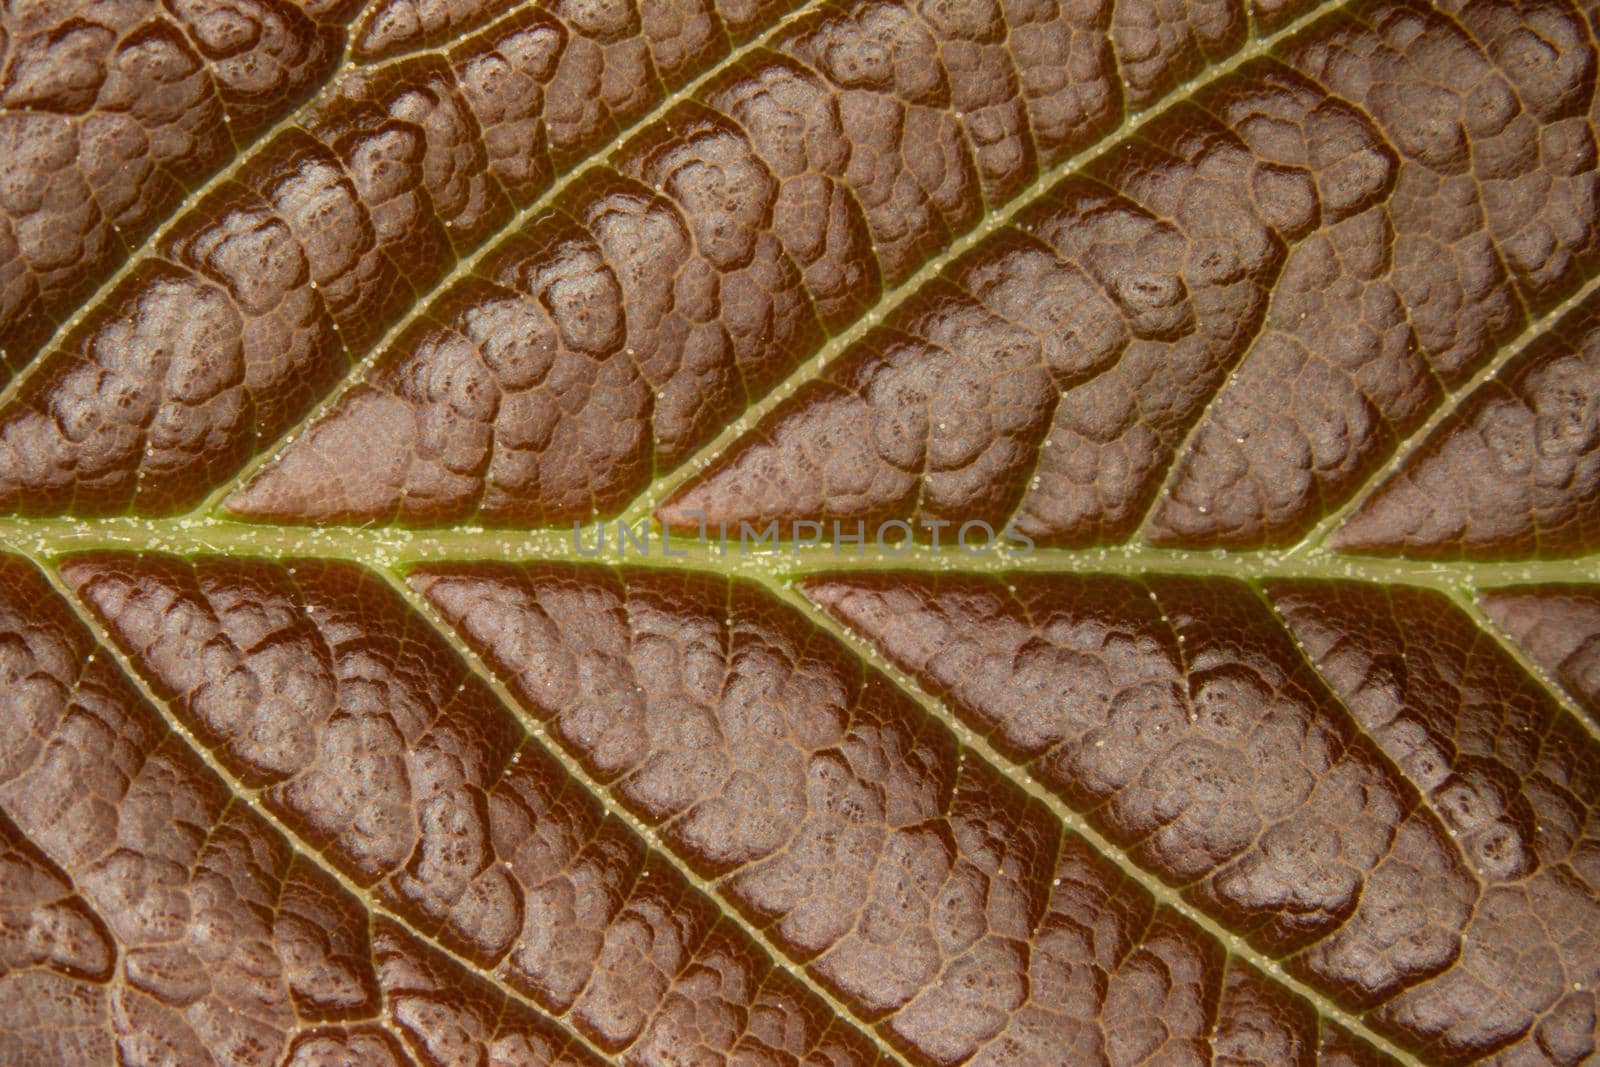 Leaf of a deciduous tree by Dr-Lange